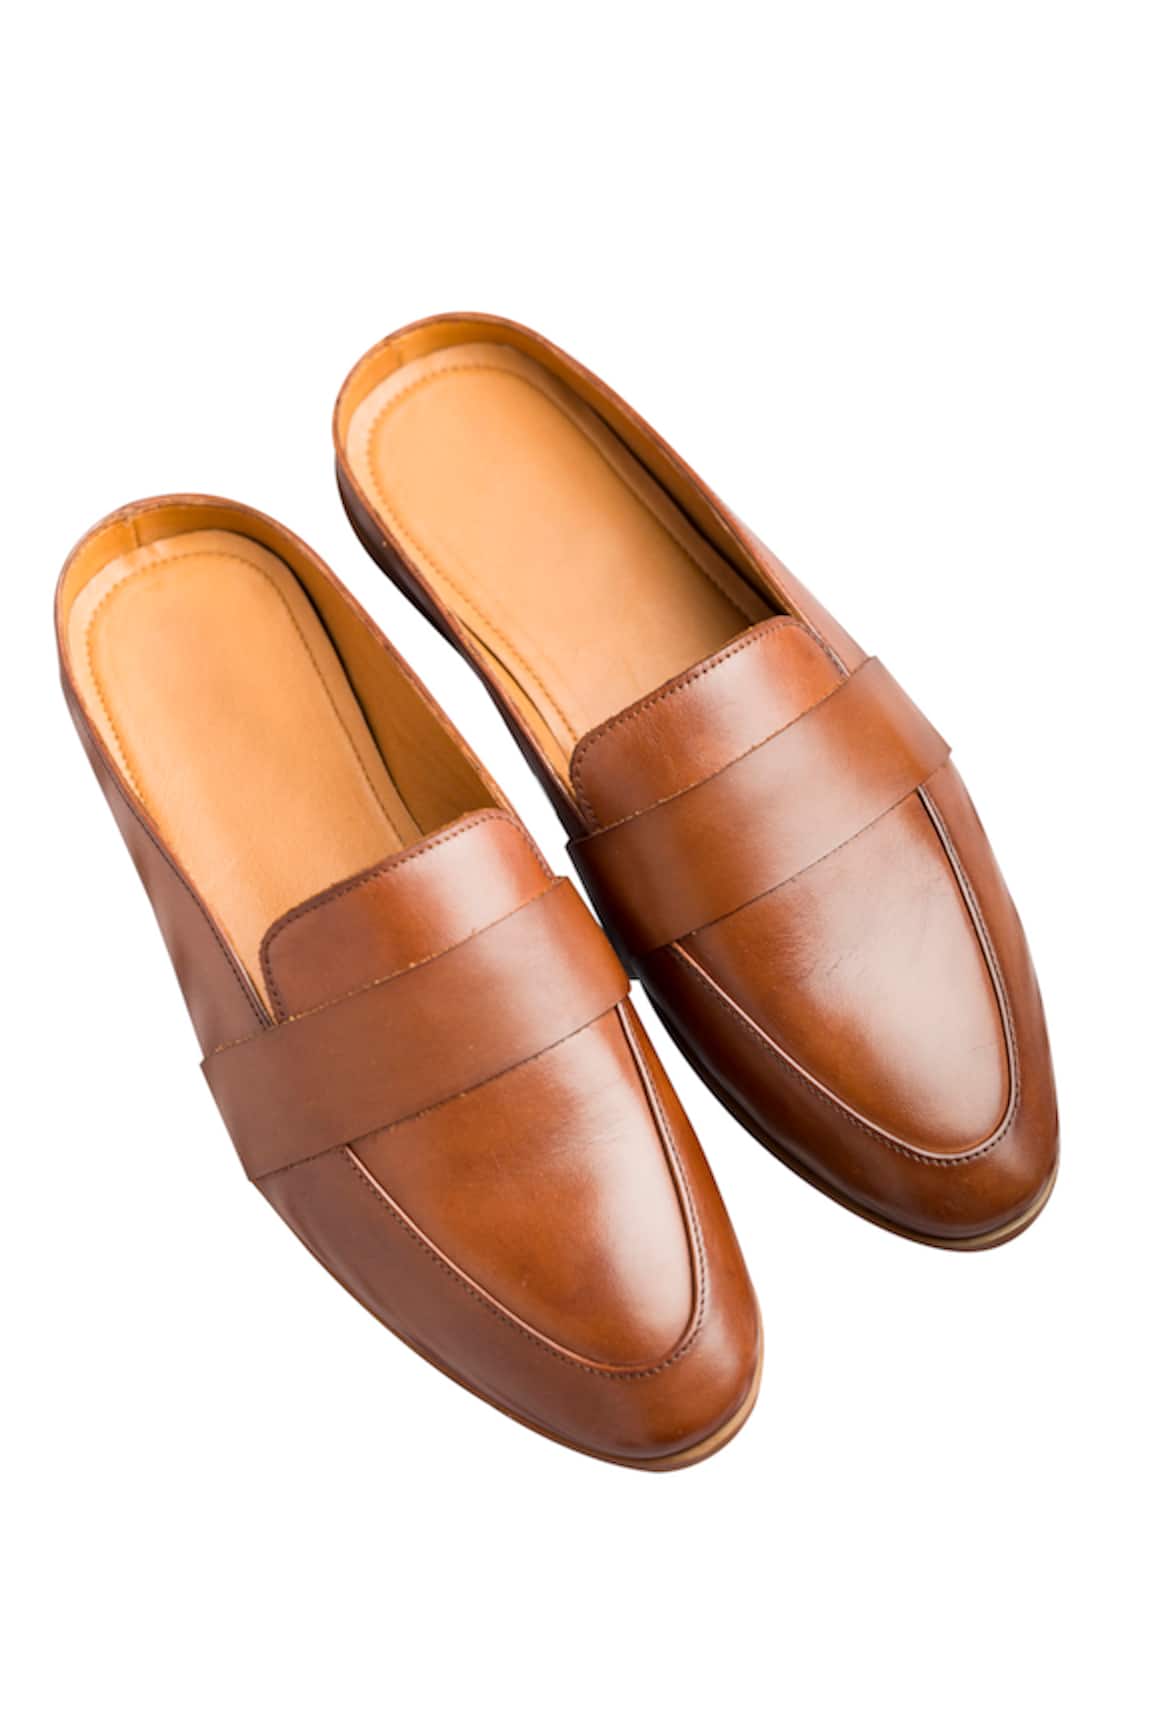 Dmodot Slip-on style flat shoes